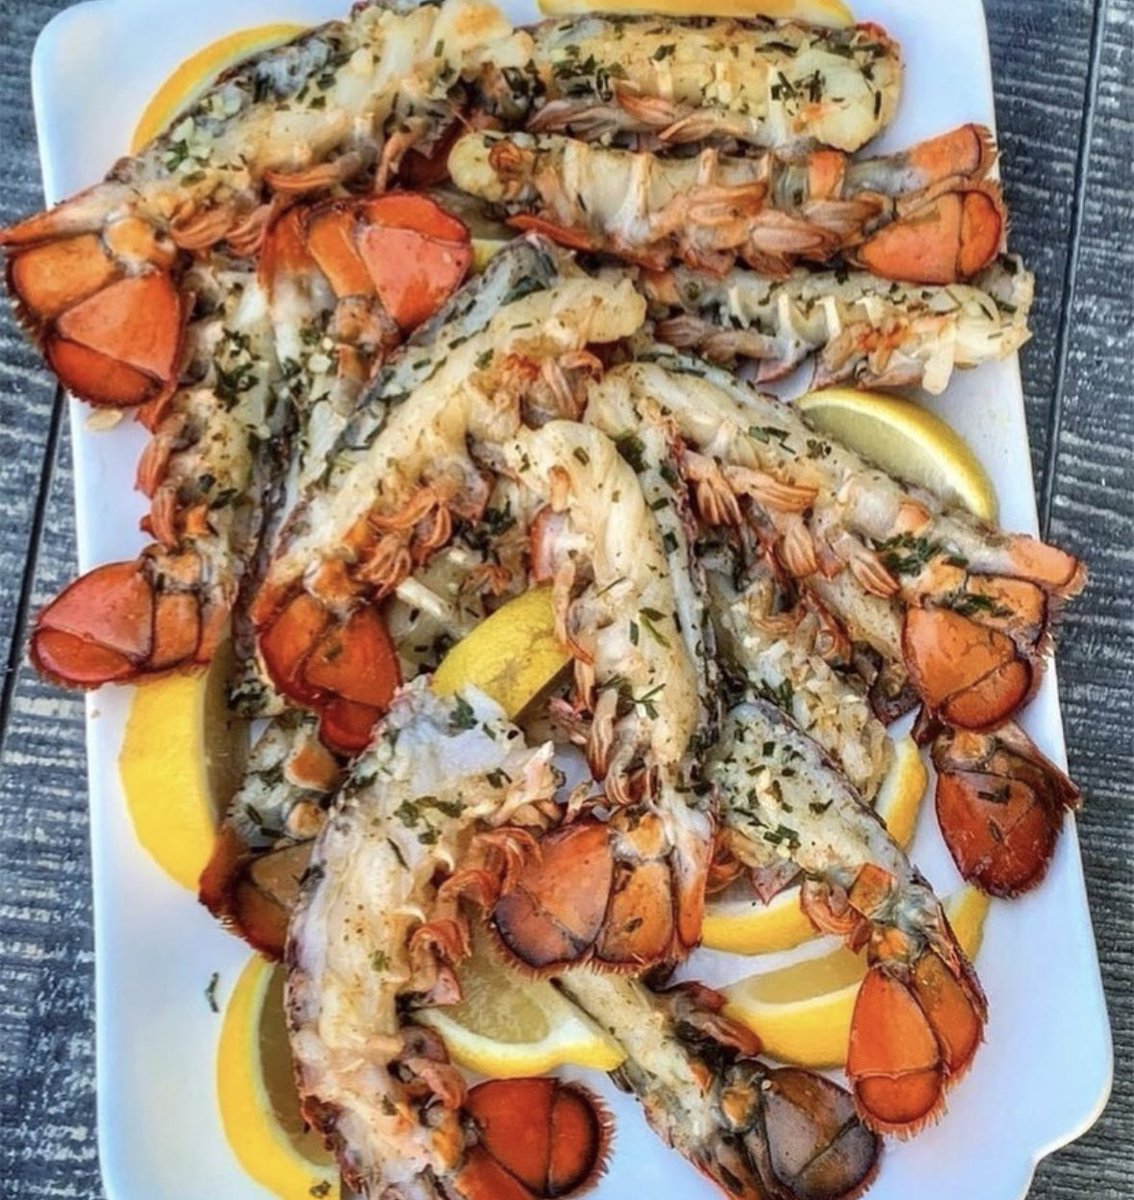 Lobster 🦞 tail in lemon garlic butter 🧈 🧄 🍋 bath….eat or pass?